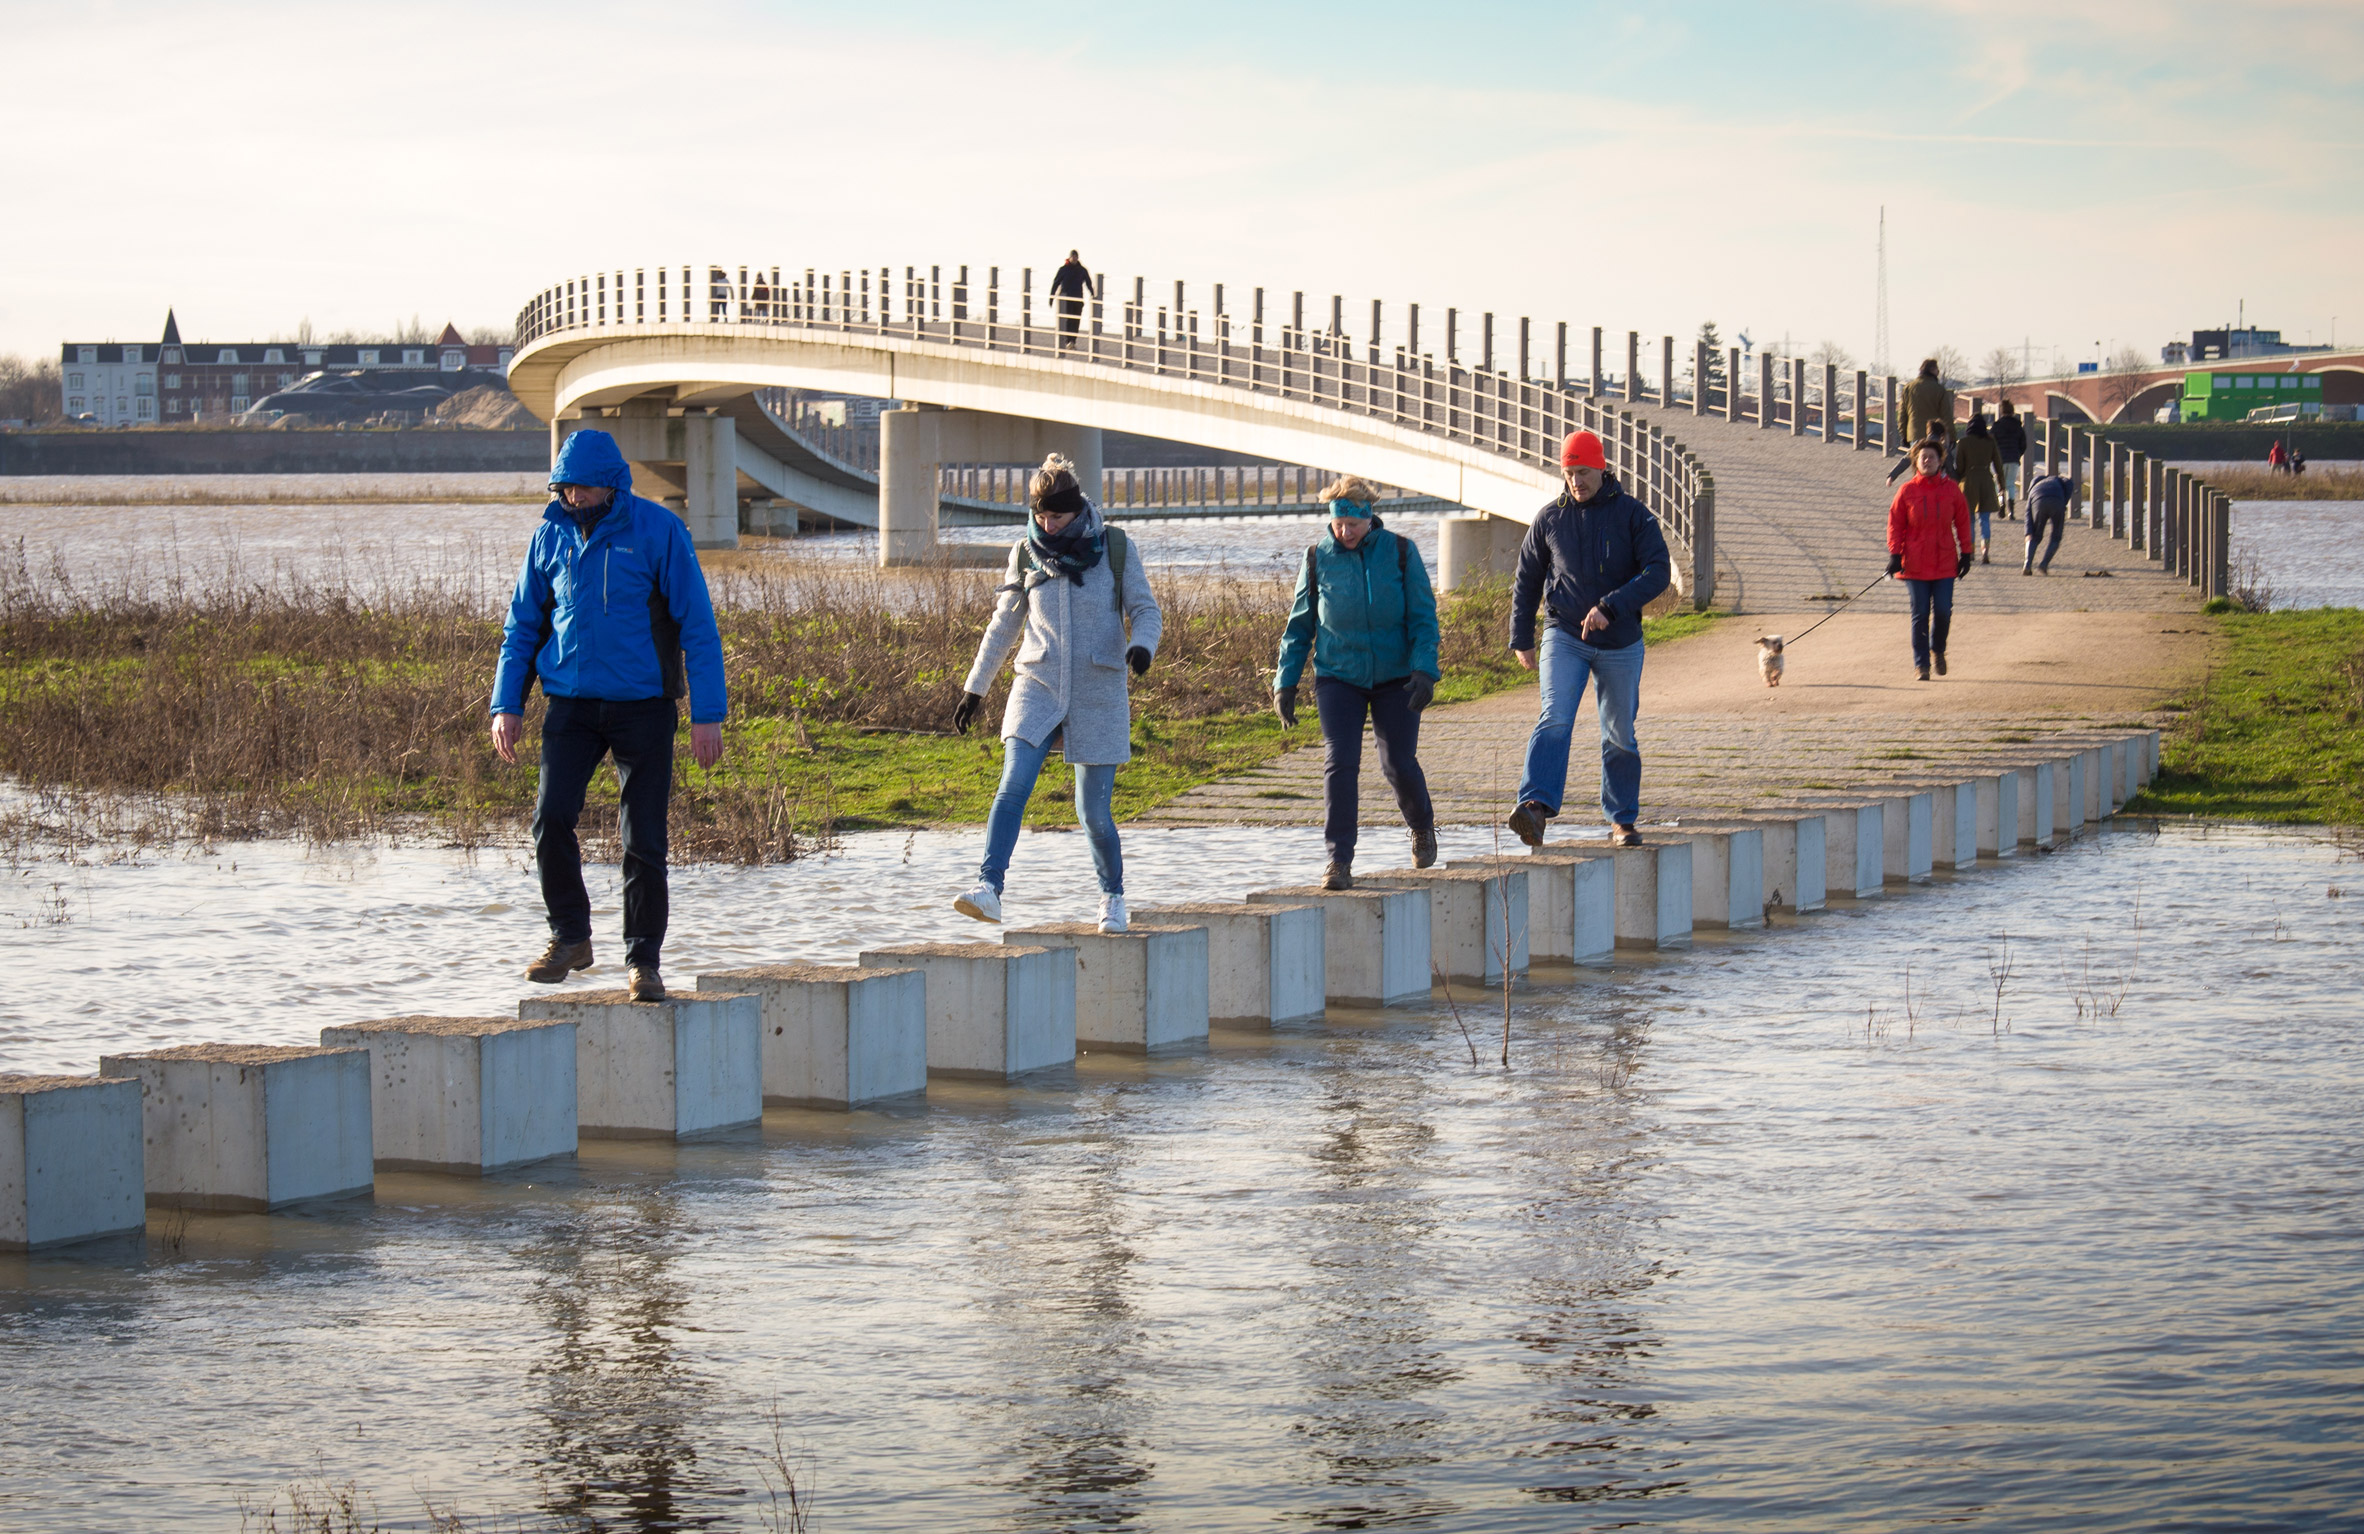 Ehl & Koumar Architekti unveils footbridge with cantilevered